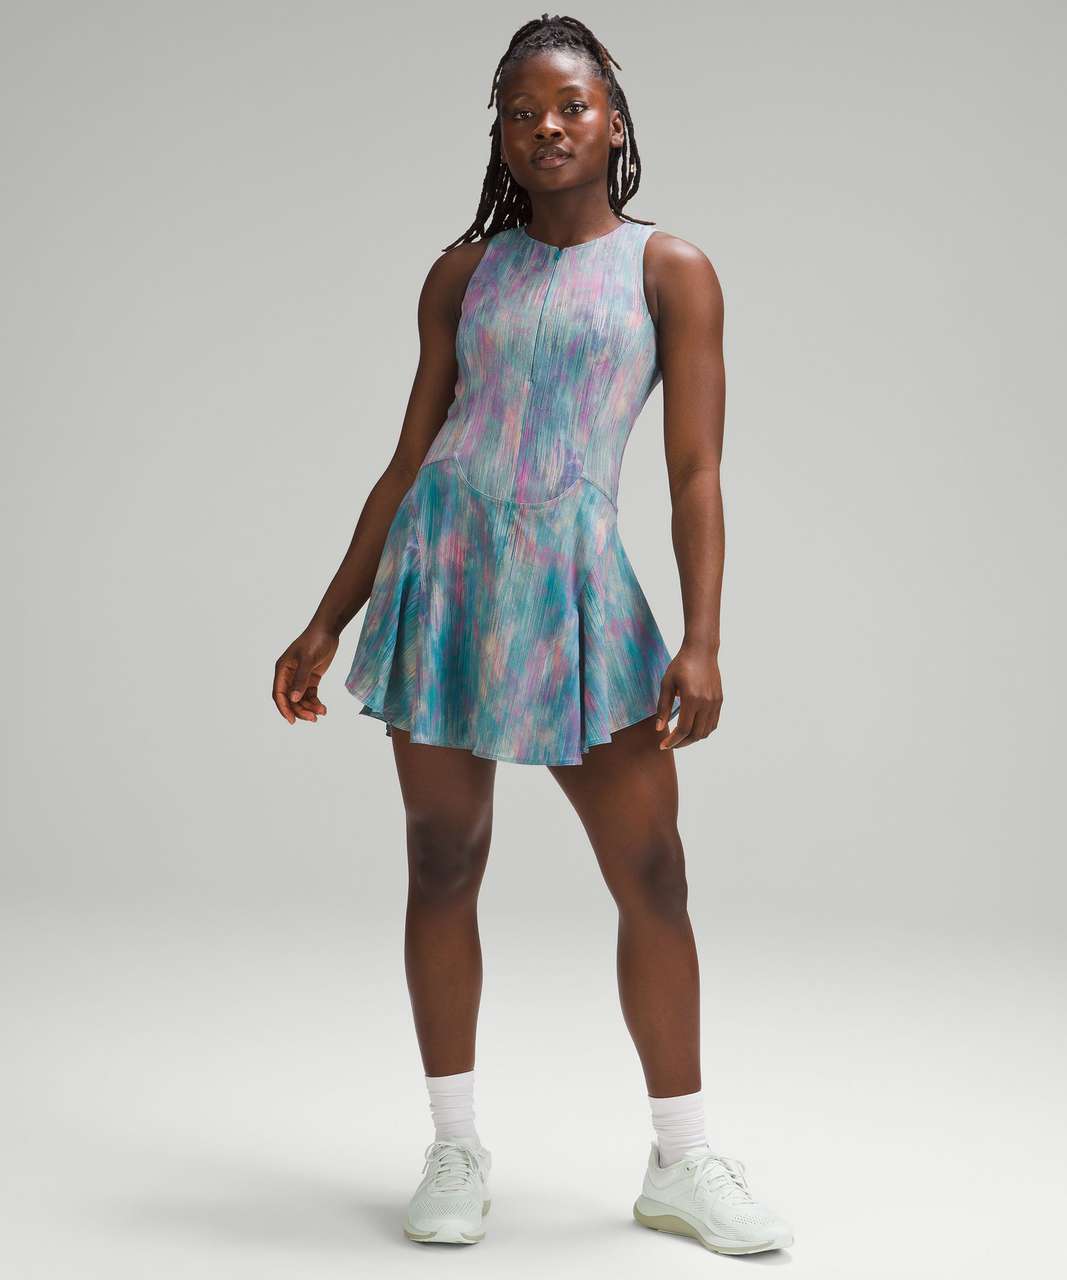 Lululemon Everlux Short-Lined Tennis Tank Dress 6" - Pixel Diffuse Multi